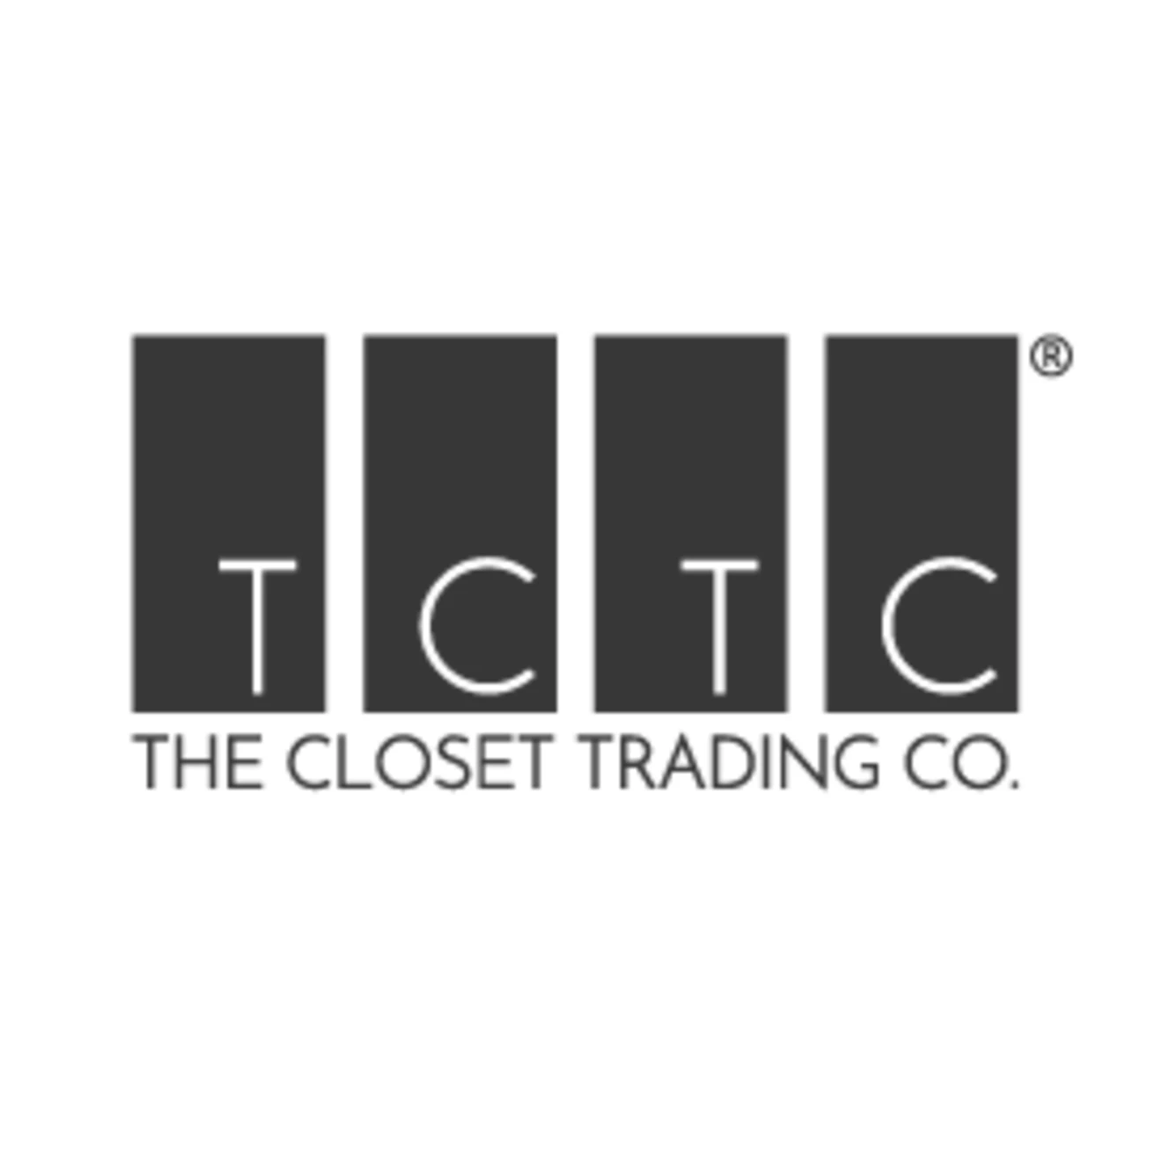 The Closet Trading Co. logo